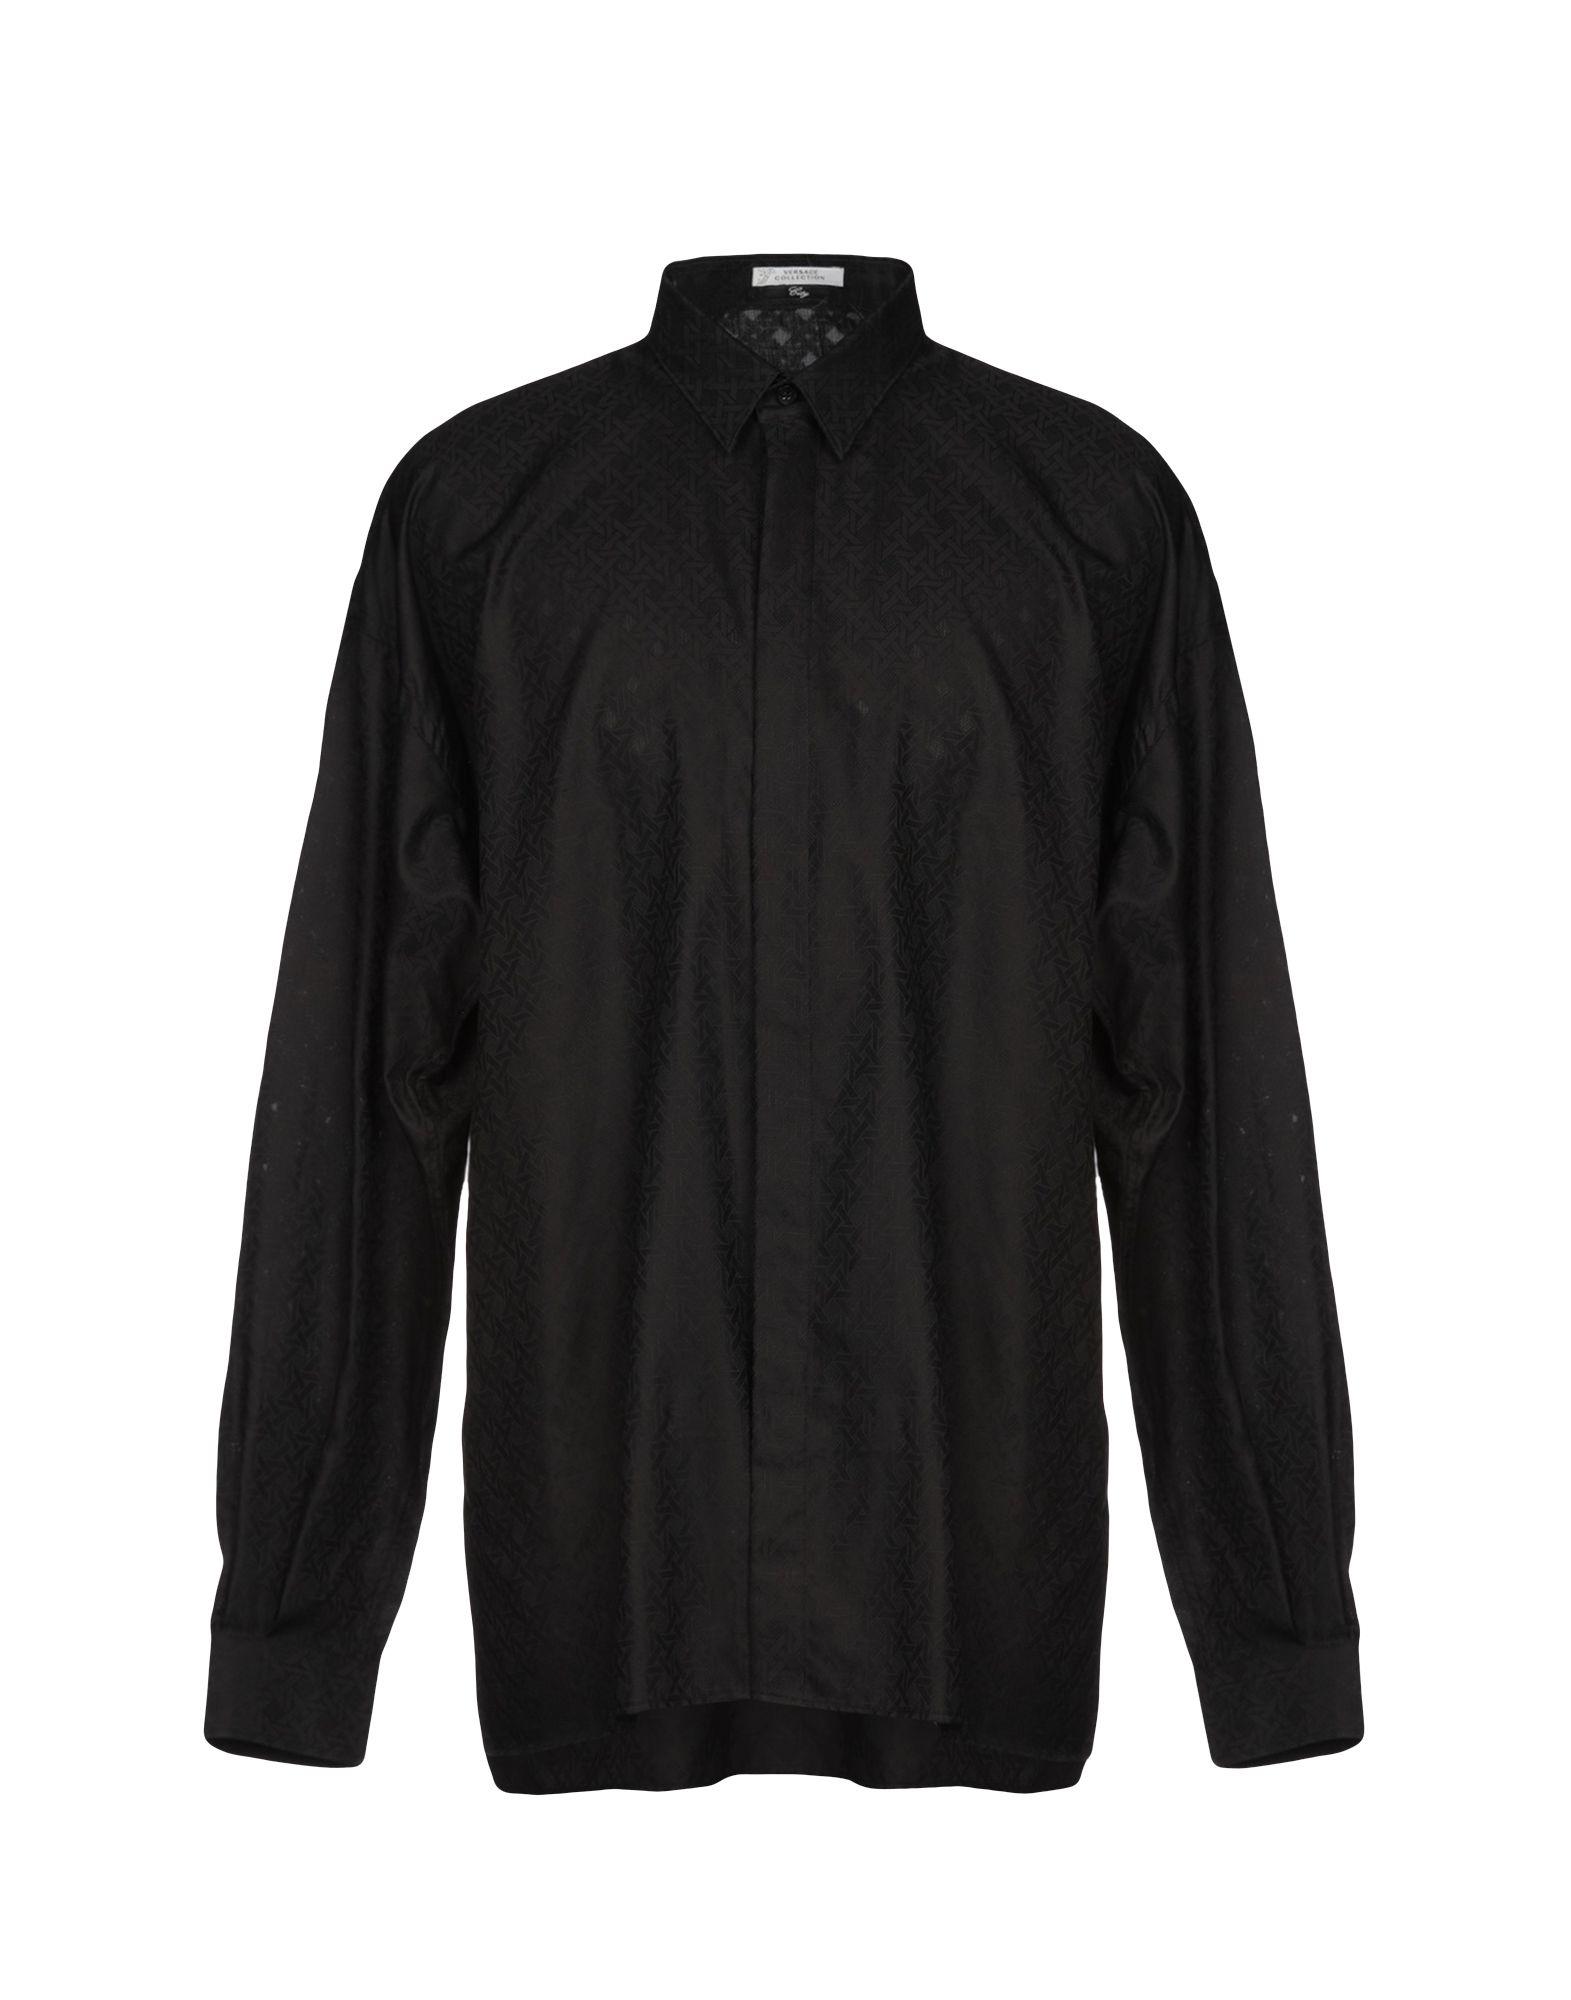 Versace Cotton Shirt in Black for Men - Lyst